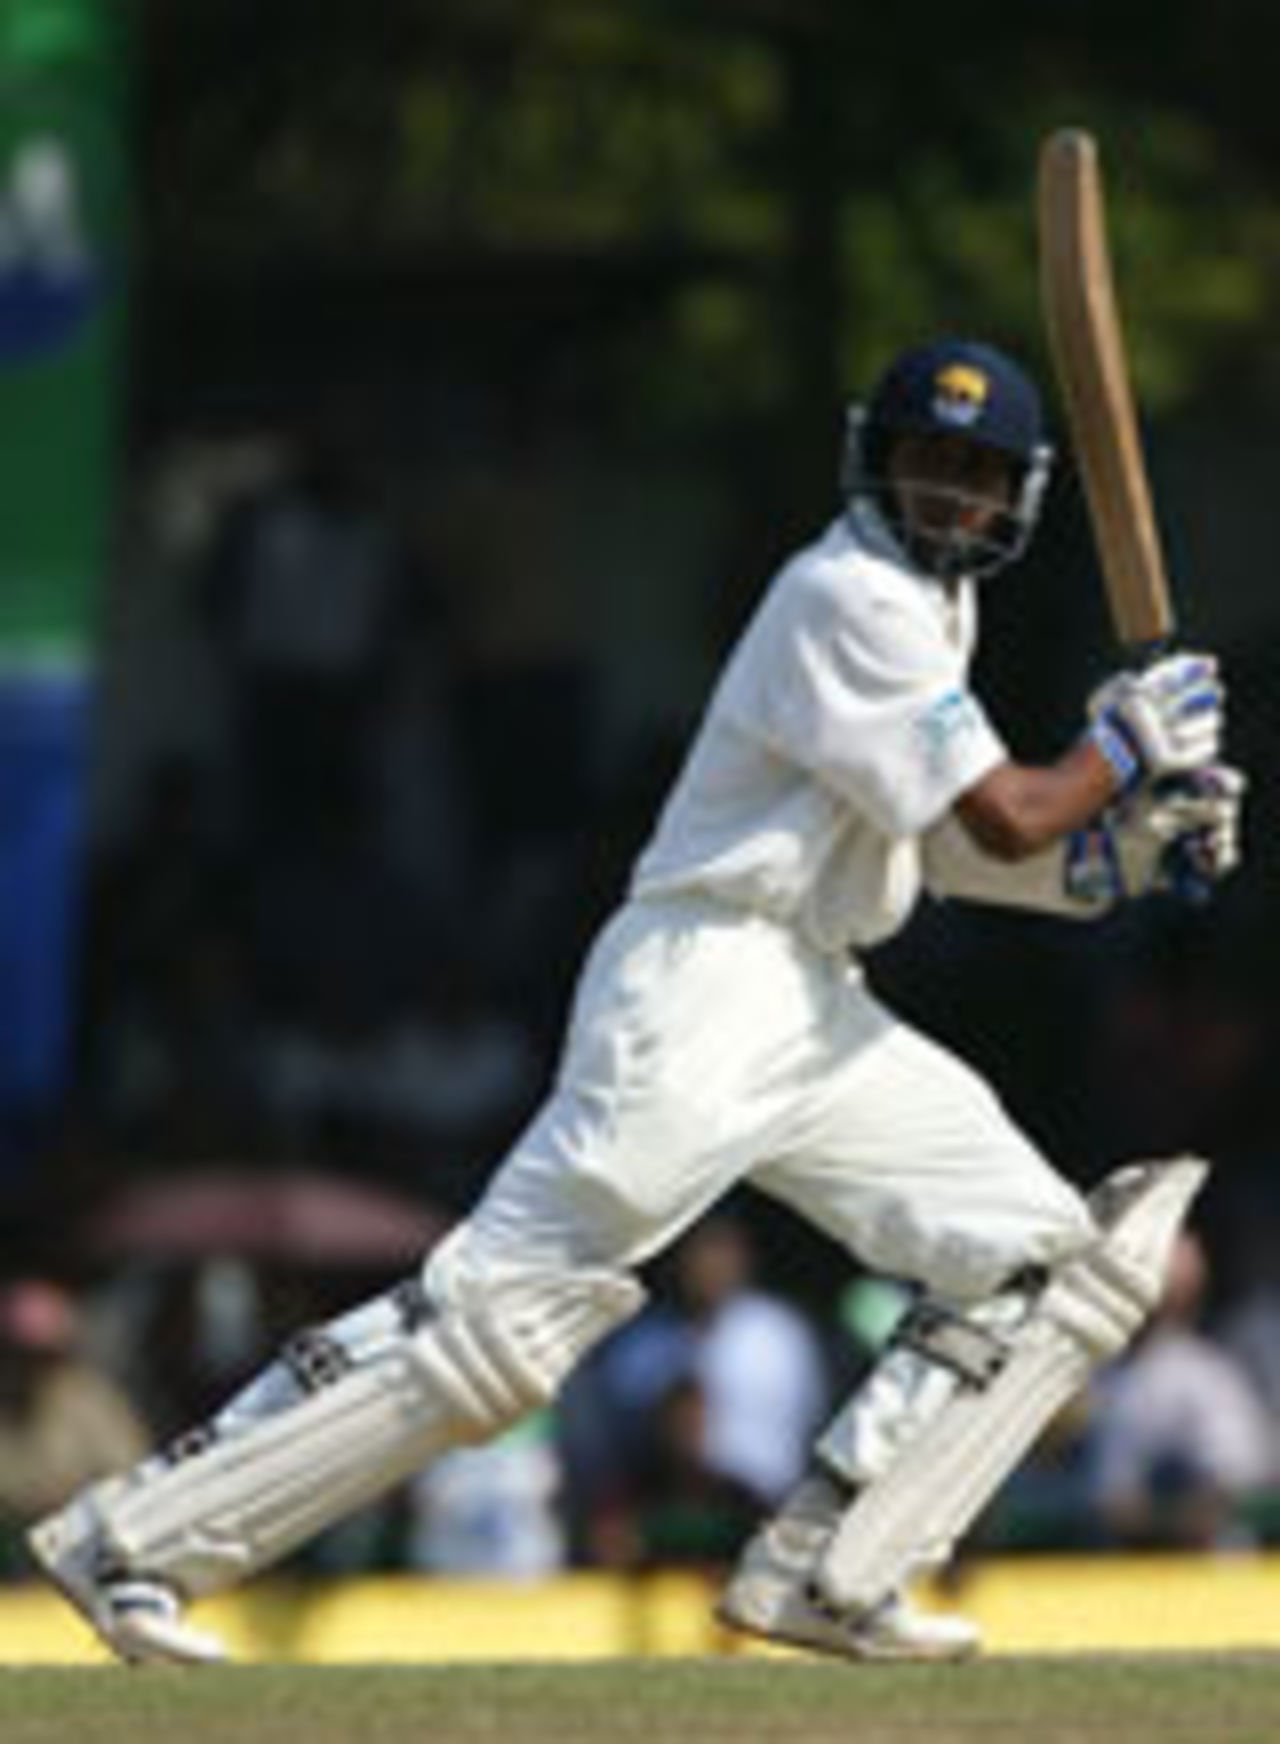 Tillakaratne Dilshan batting, Sri Lanka v England, 2nd Test, Kandy, December 10, 2003